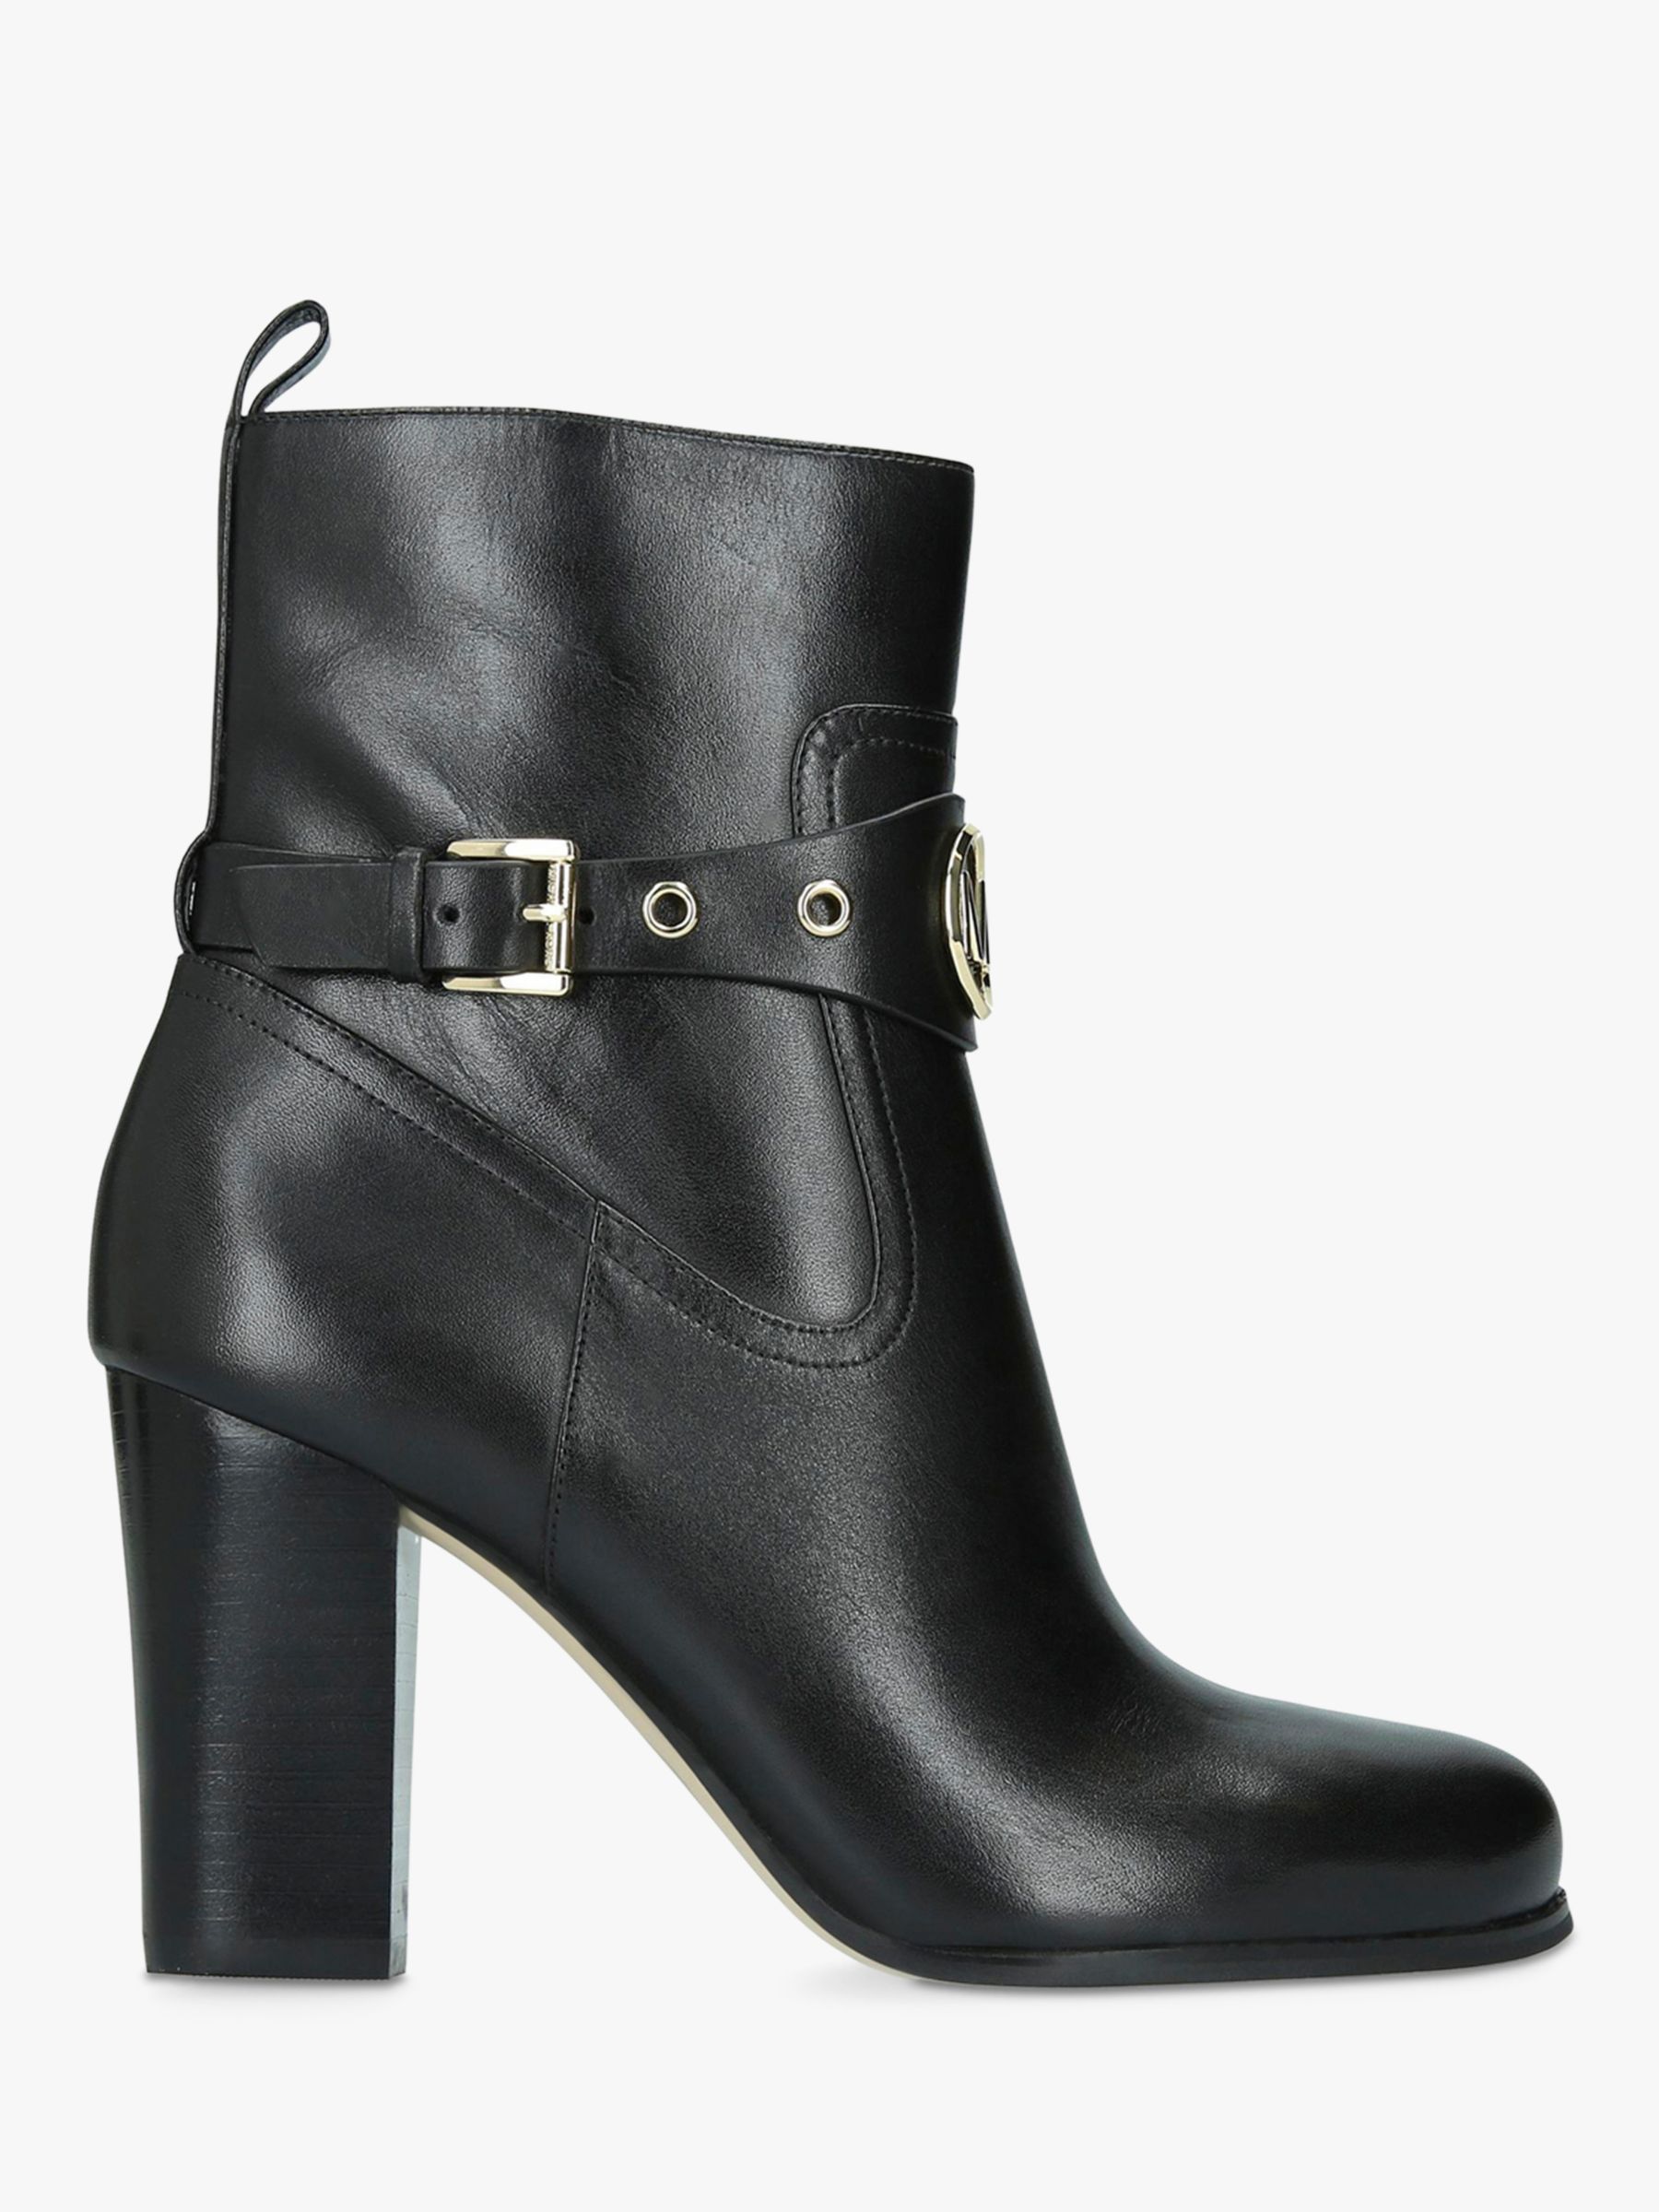 MICHAEL Michael Kors Heather Block Heel Ankle Boots, Black Leather